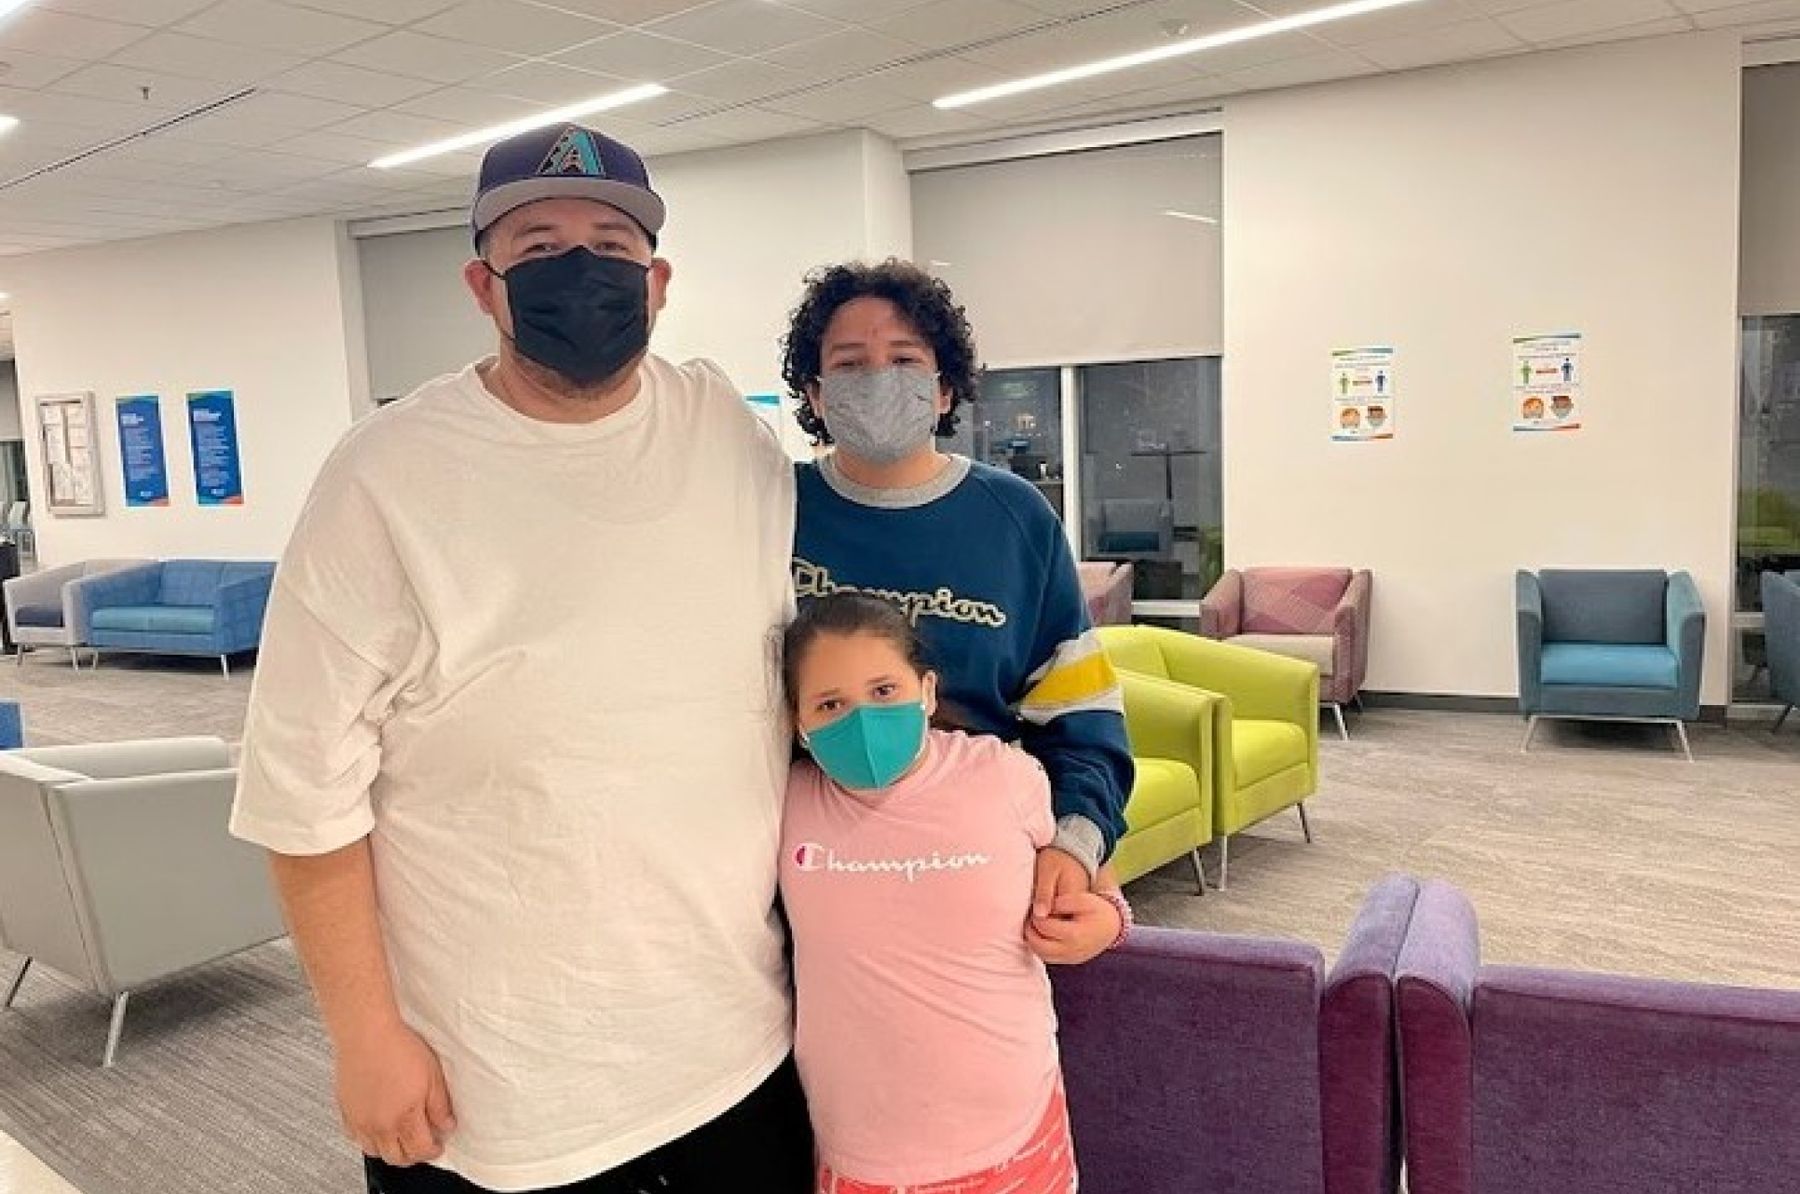 Masked family stands together inside a medical center waiting room.